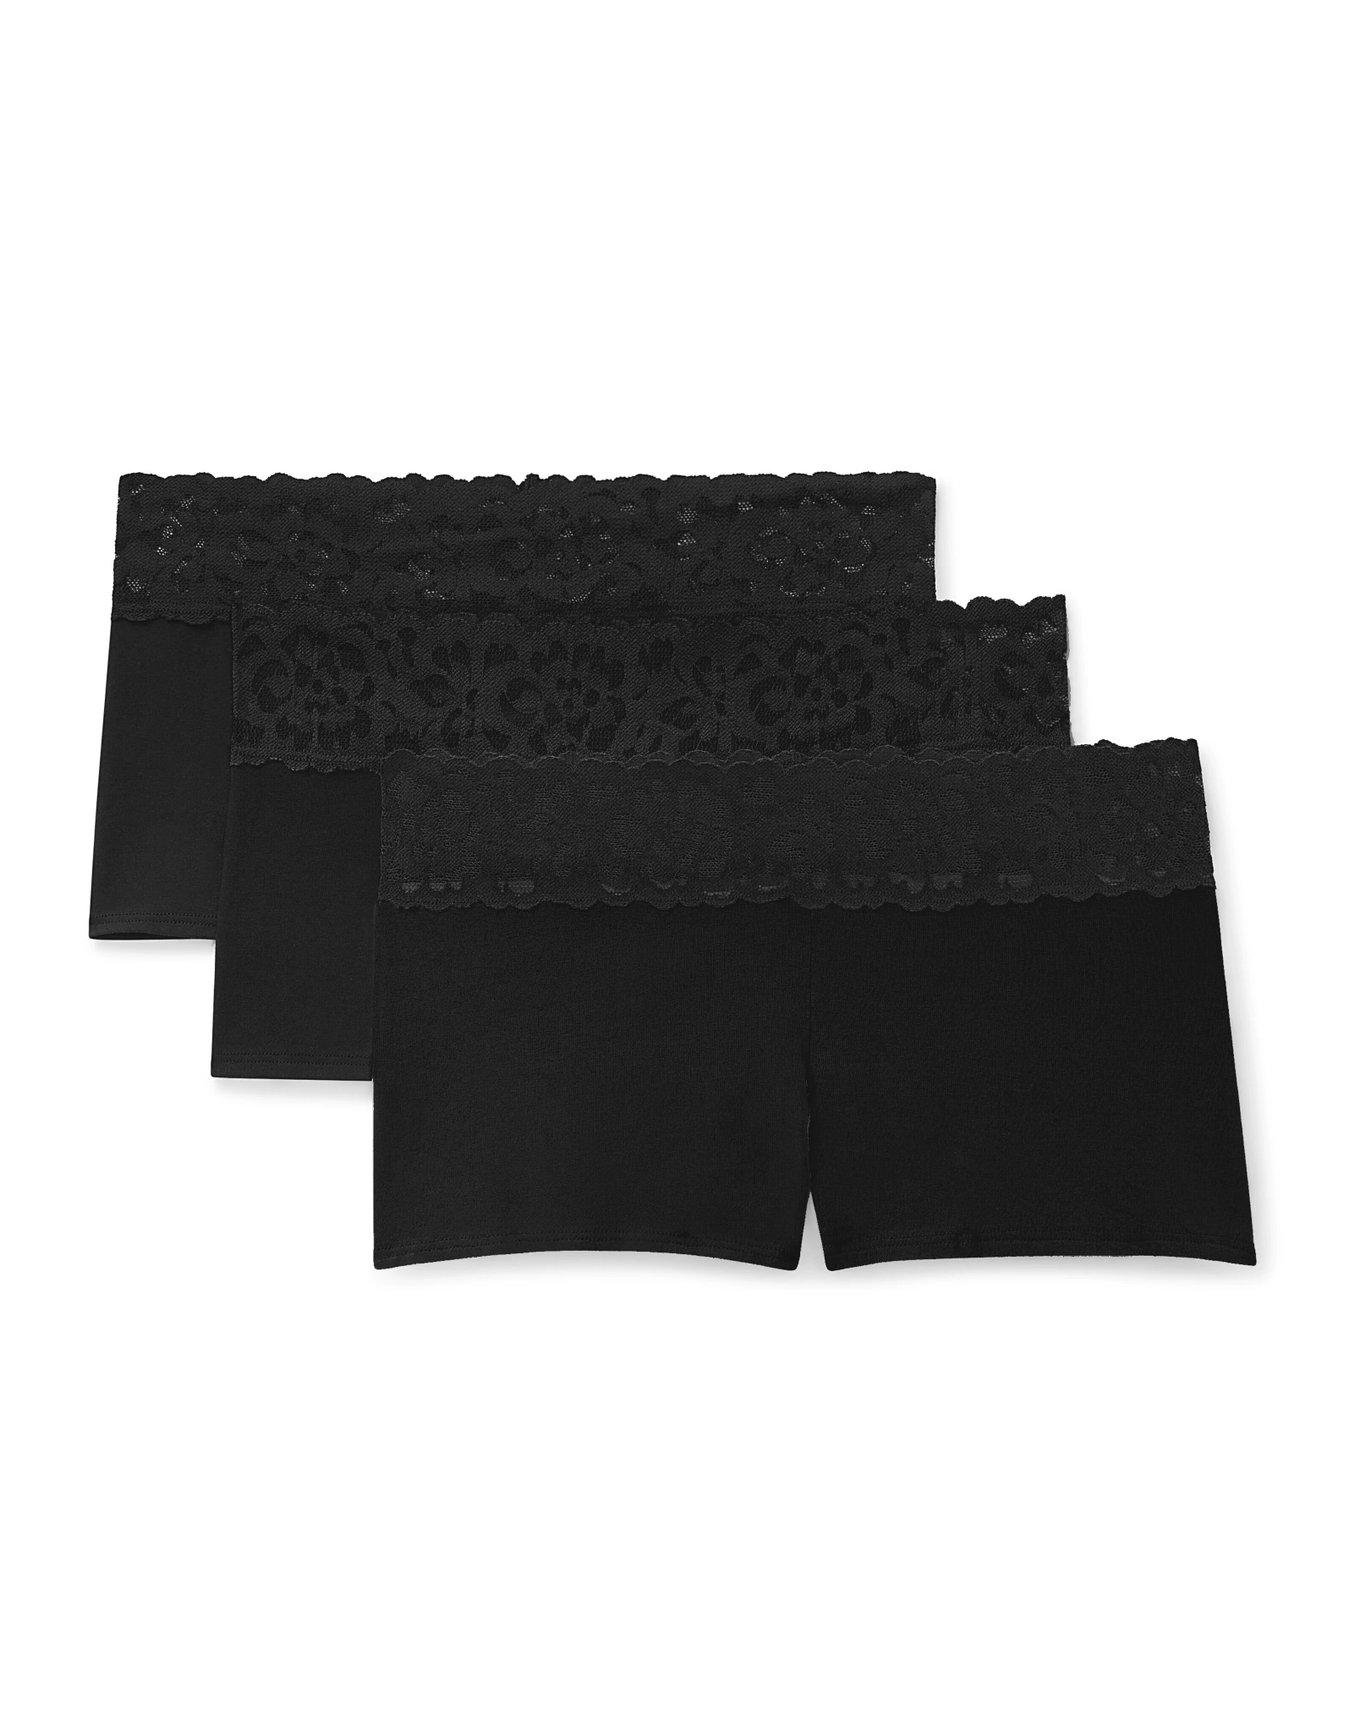 Leondra Cotton Pack Shortie Black 2 Shortie Panties (Pack of 3)